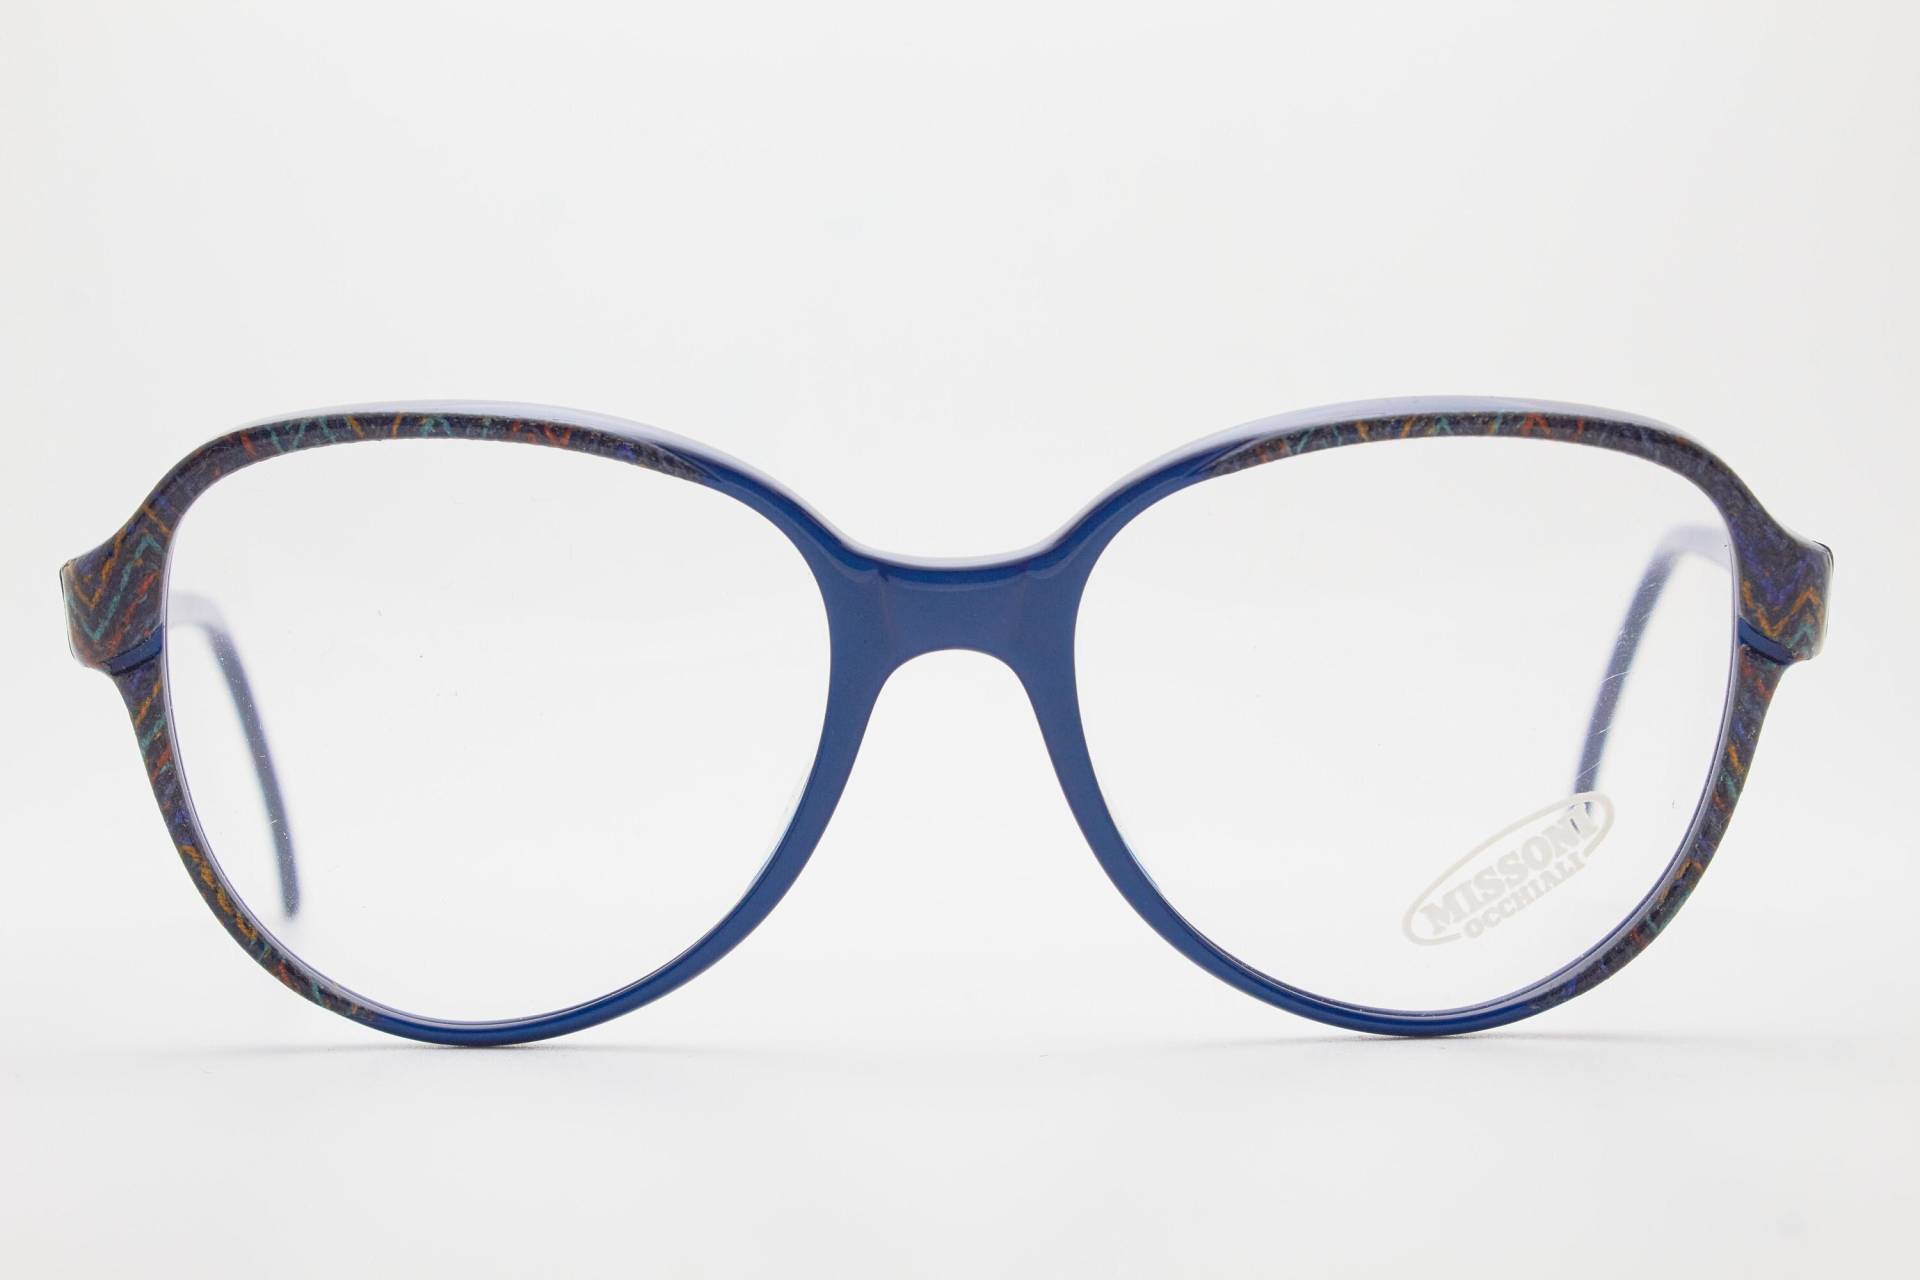 Missoni M116 Vintage Brillen 1980Er Jahre Blaue Kunststoff Oversize Sonnenbrille Schmetterlingsbrille Damenbrillen Schmetterlingsbrillen von VintageGlassesVault